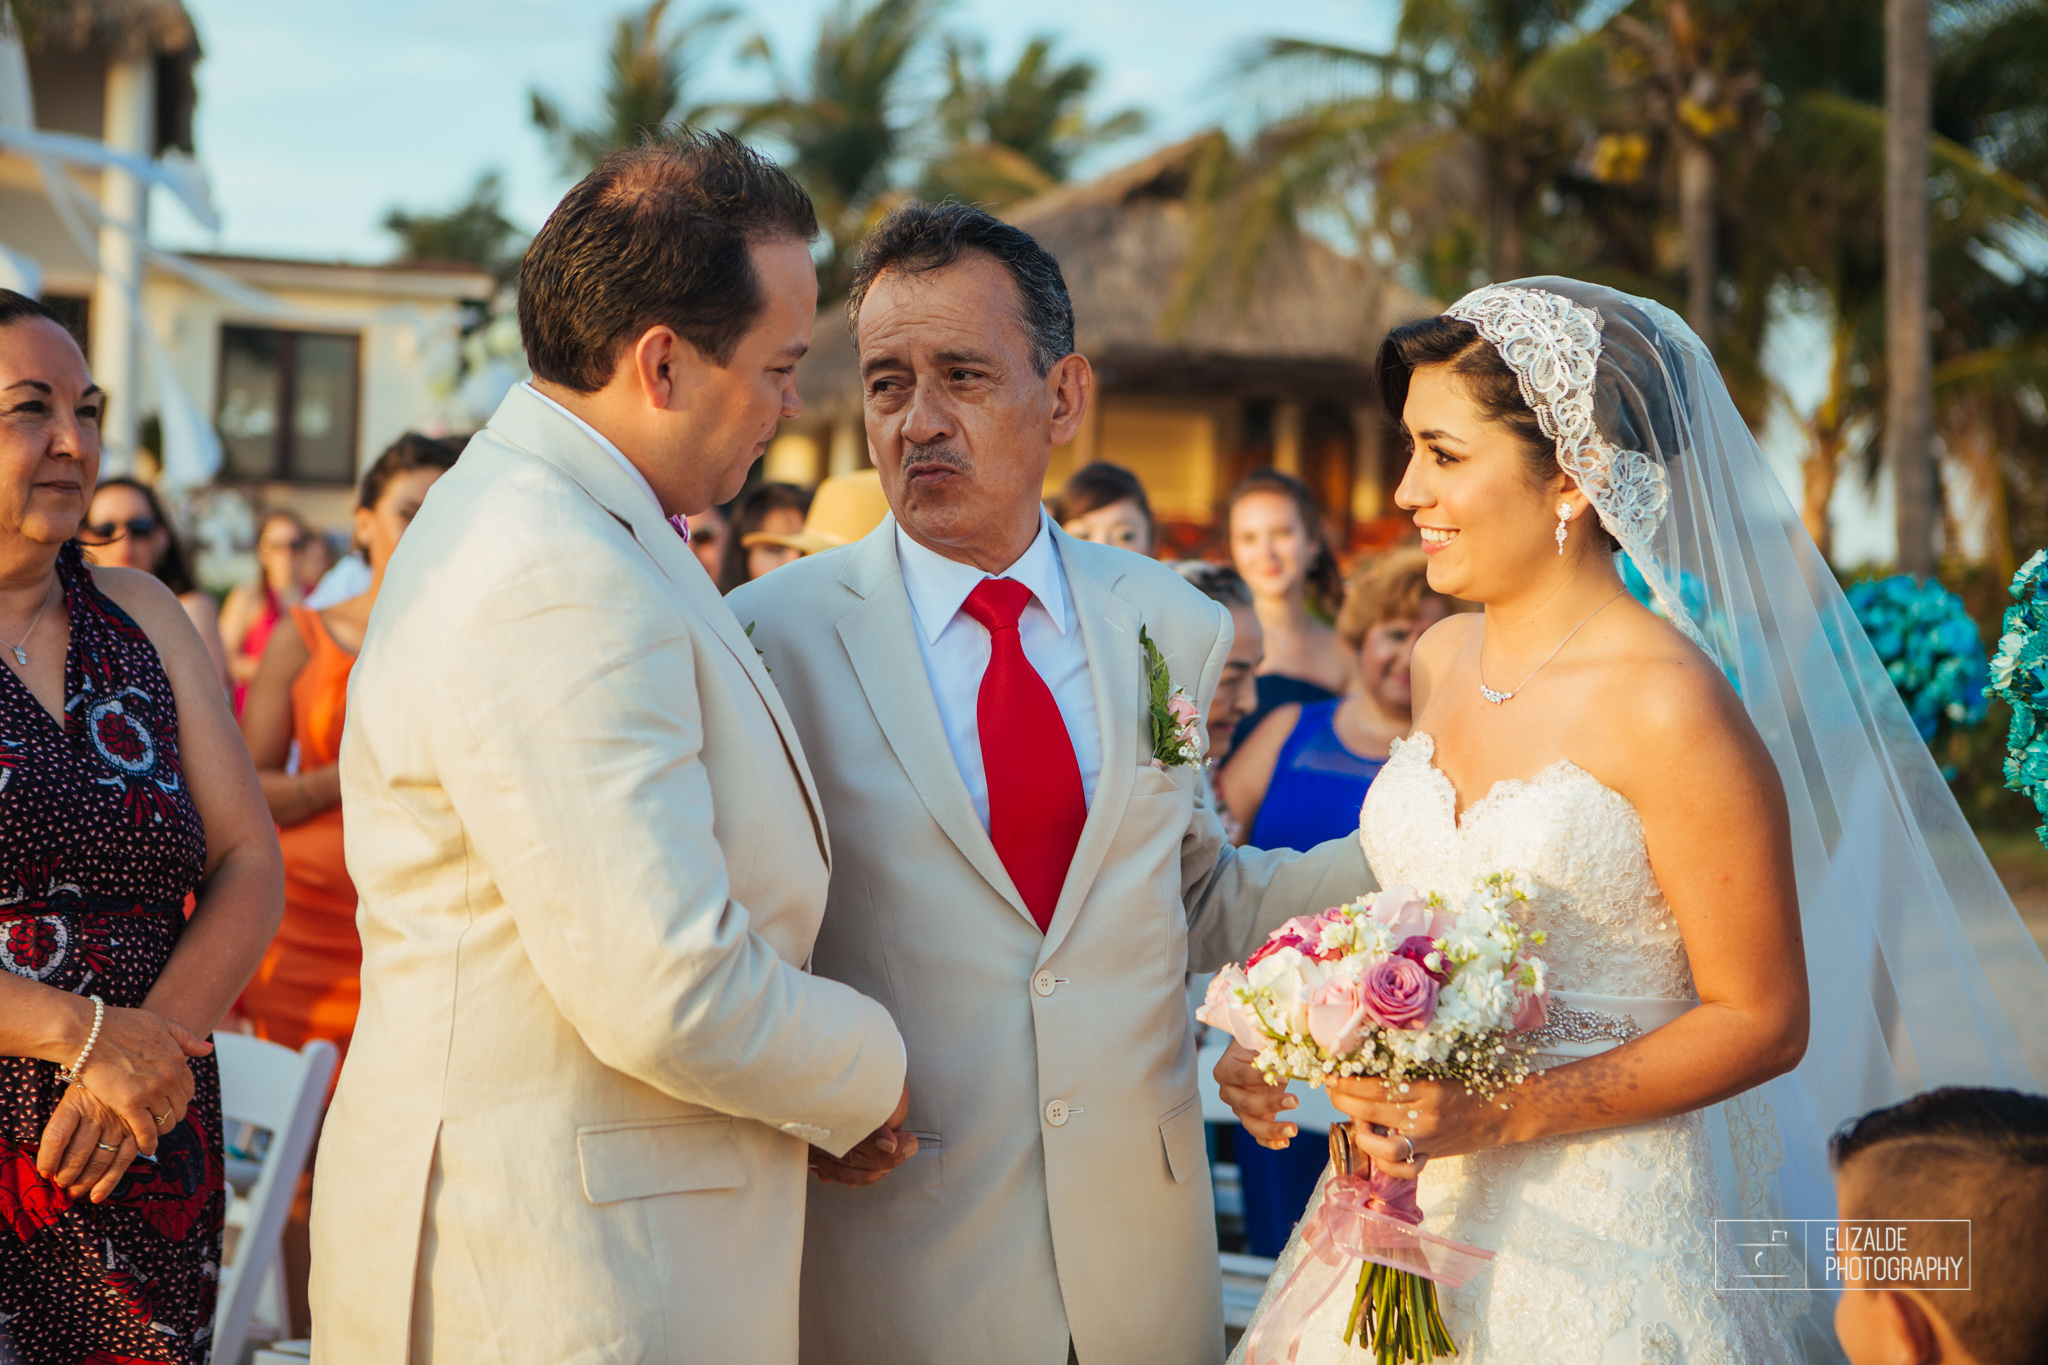 Pay and Ferran_Acapulco_Destination Wedding_Elizalde Photography-81.jpg